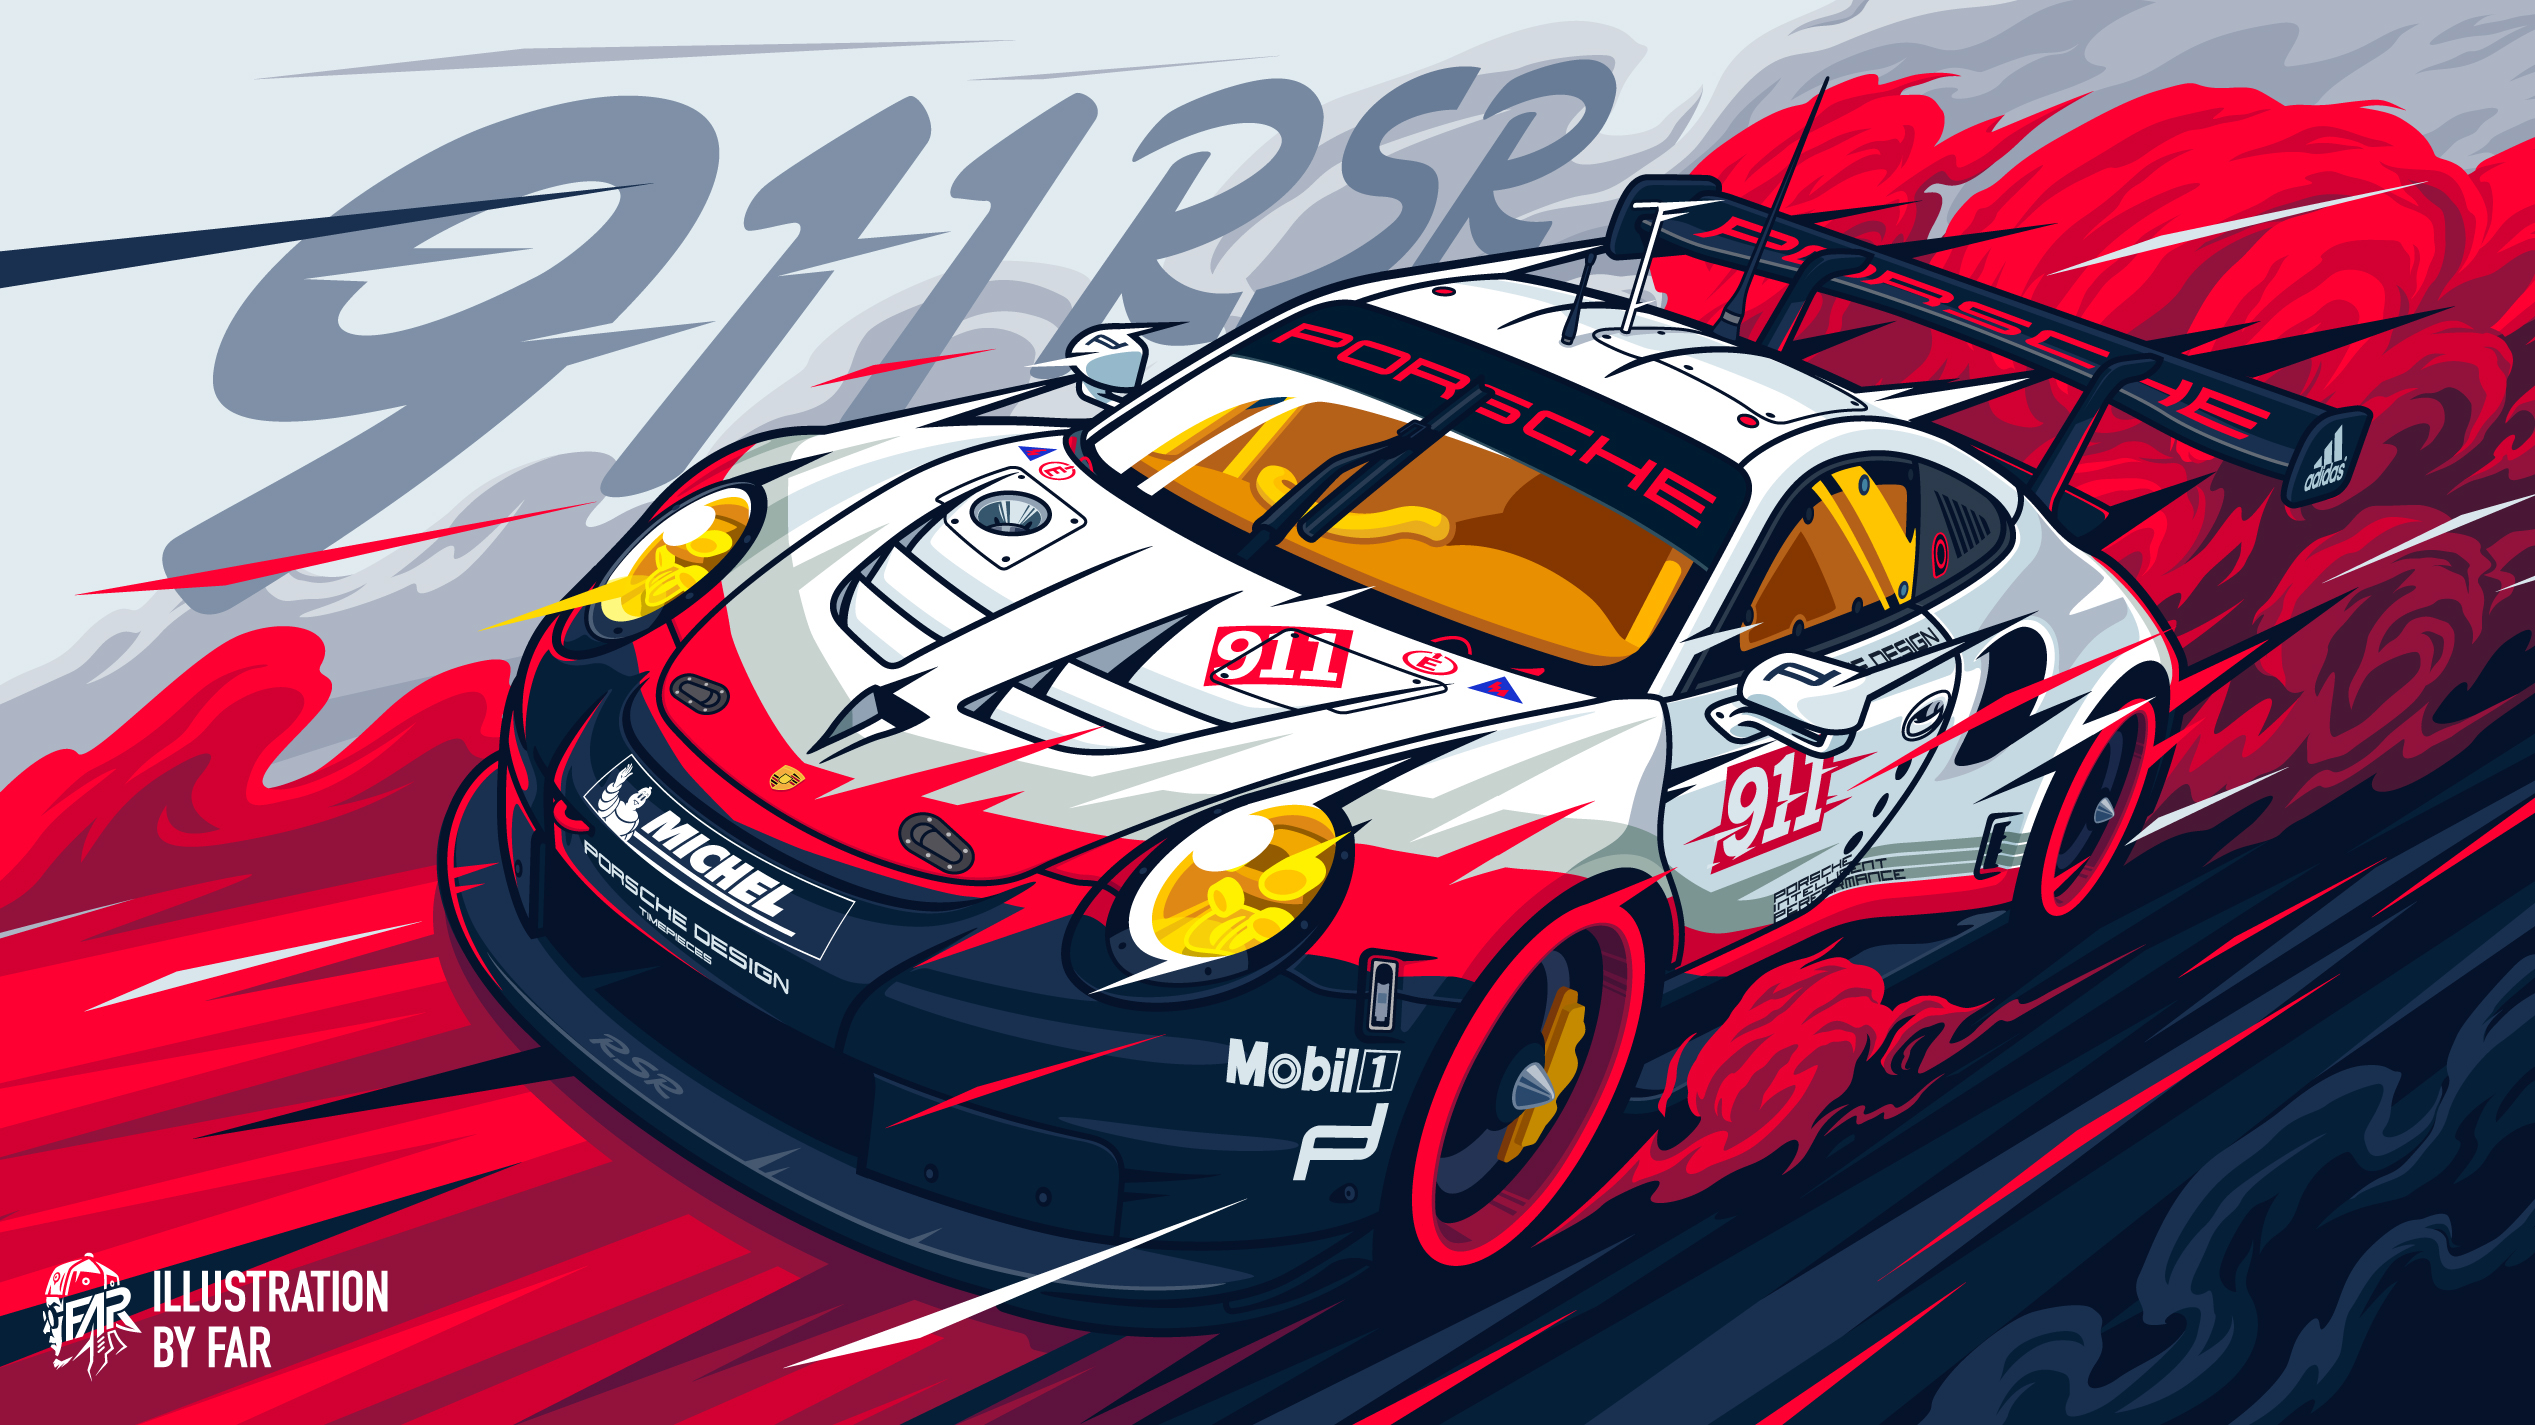 General 2535x1425 digital art artwork illustration car vehicle Porsche Porsche 911 RSR race cars smoke car spoiler frontal view